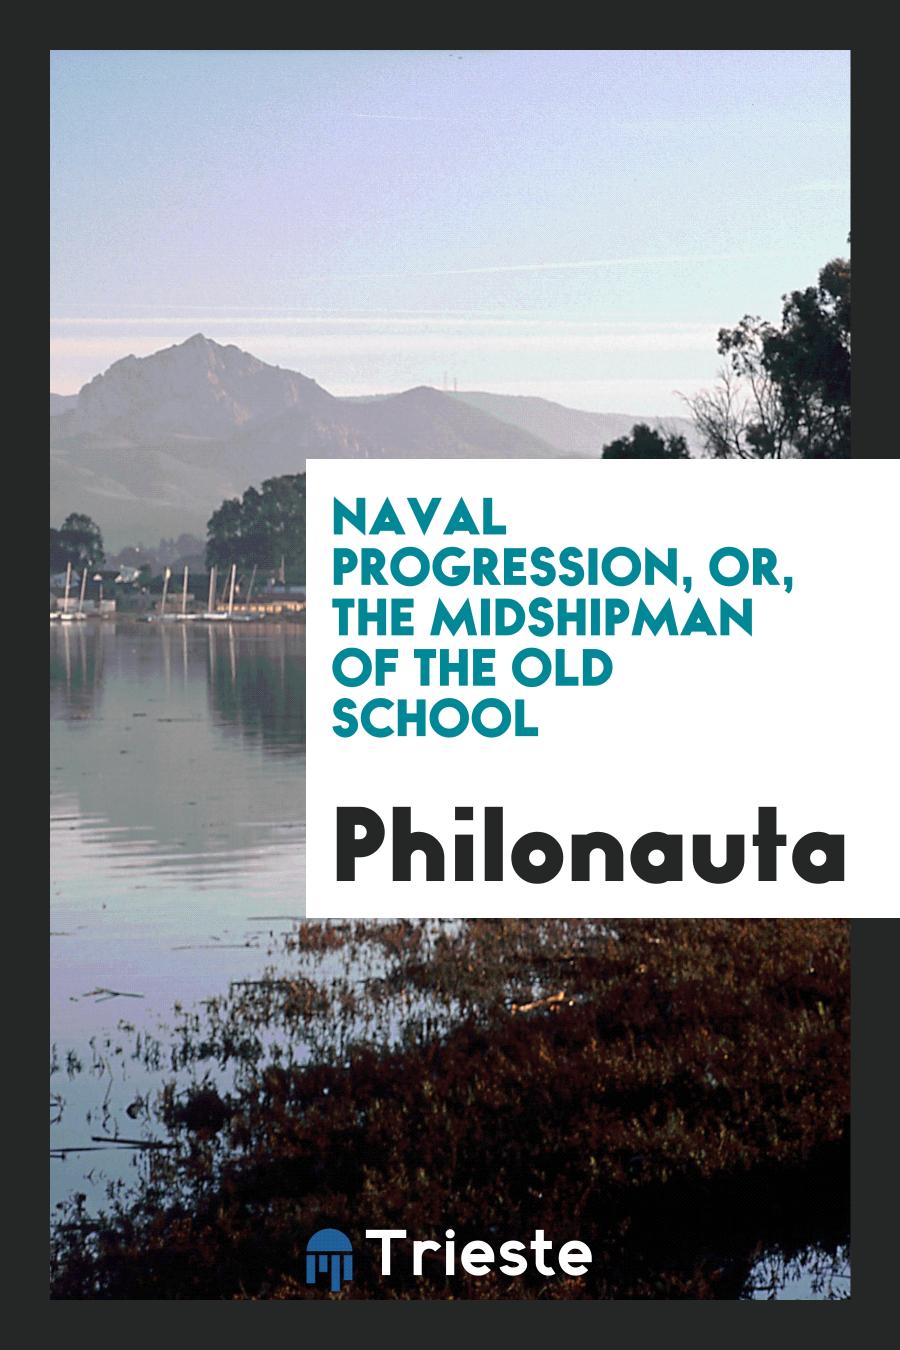 Philonauta - Naval progression, or, The midshipman of the old school